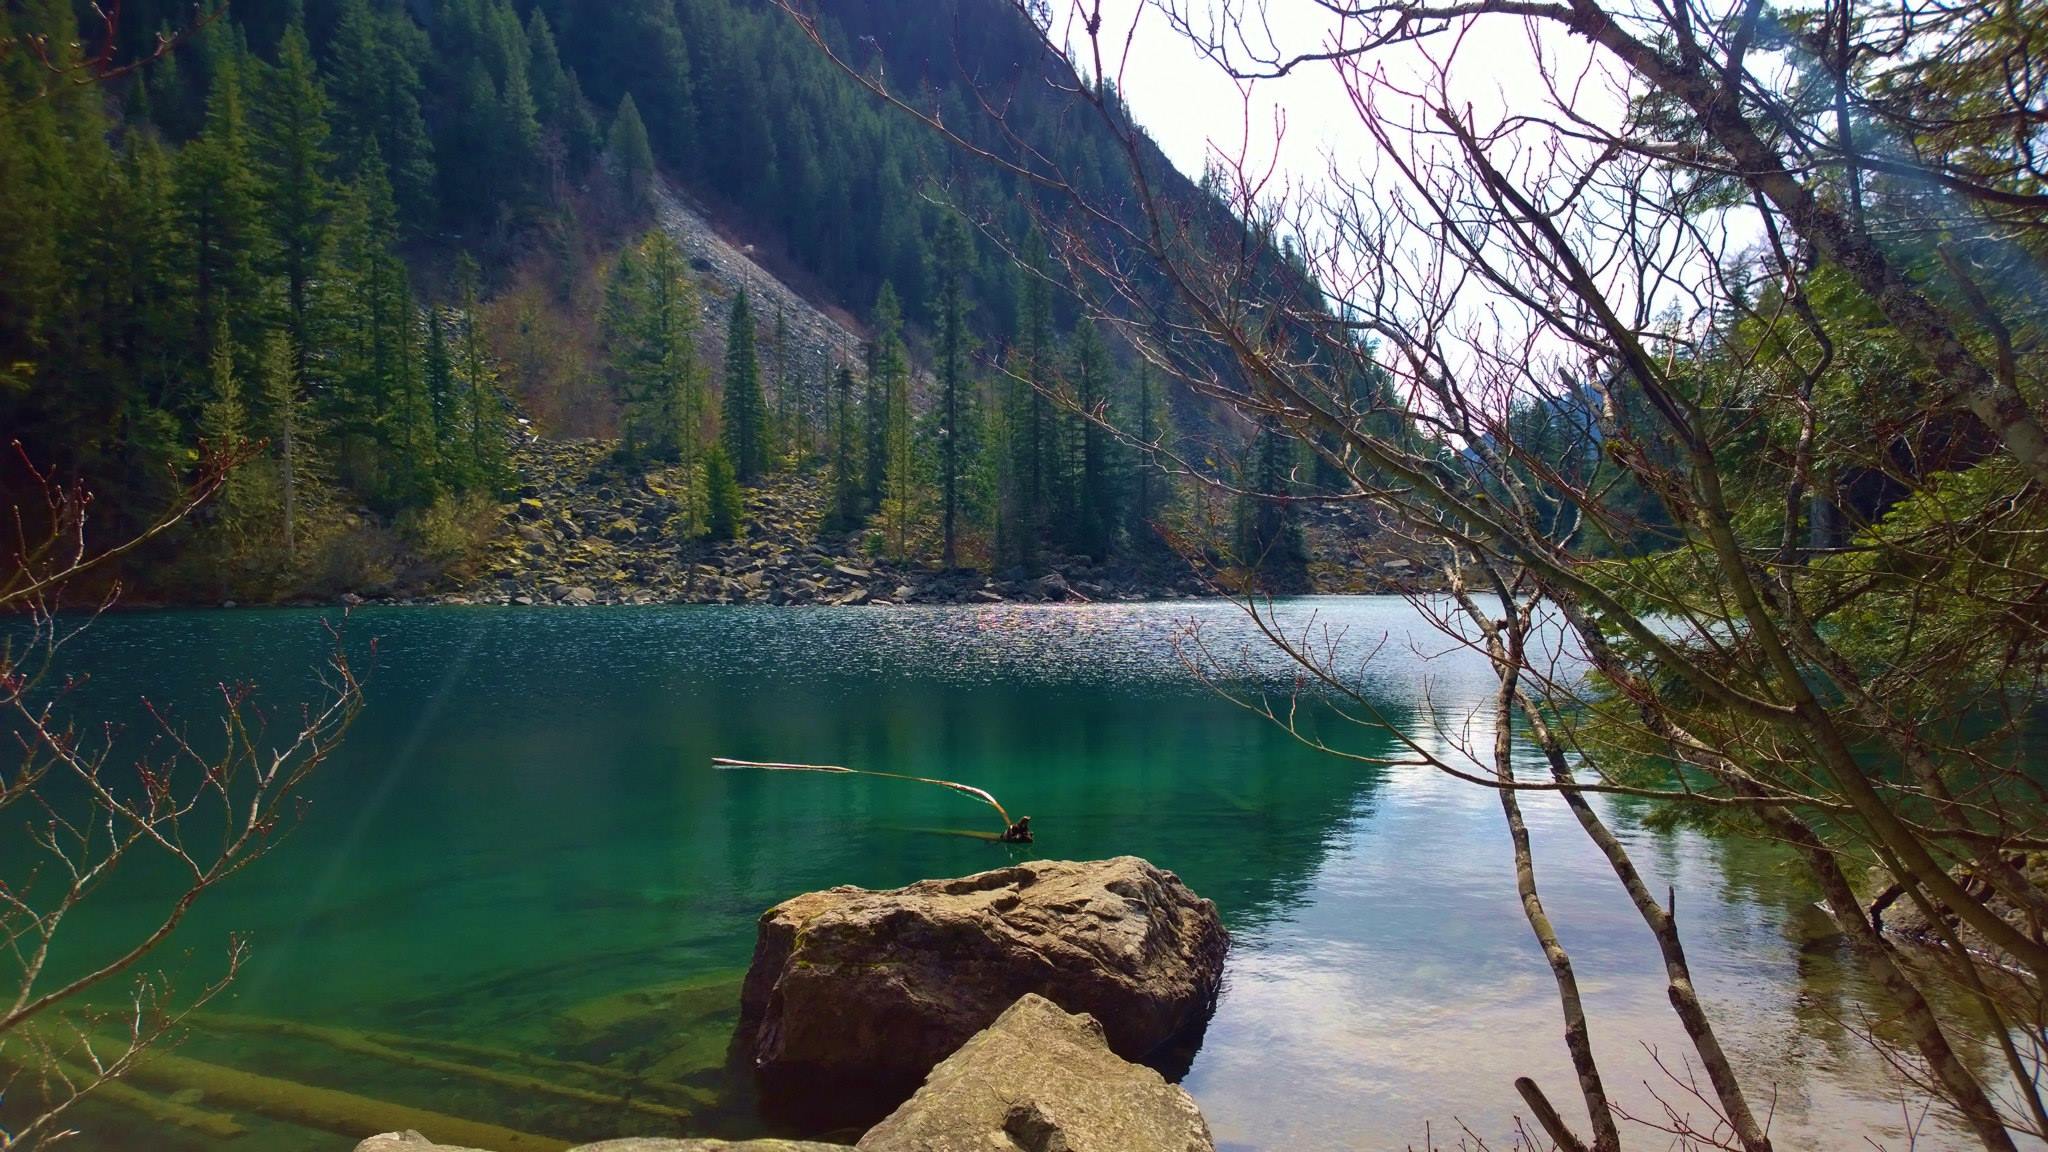 lindeman lake hiking trail, chilliwack lake provincial park, bc parks, hikes near vancouver, greendrop lake